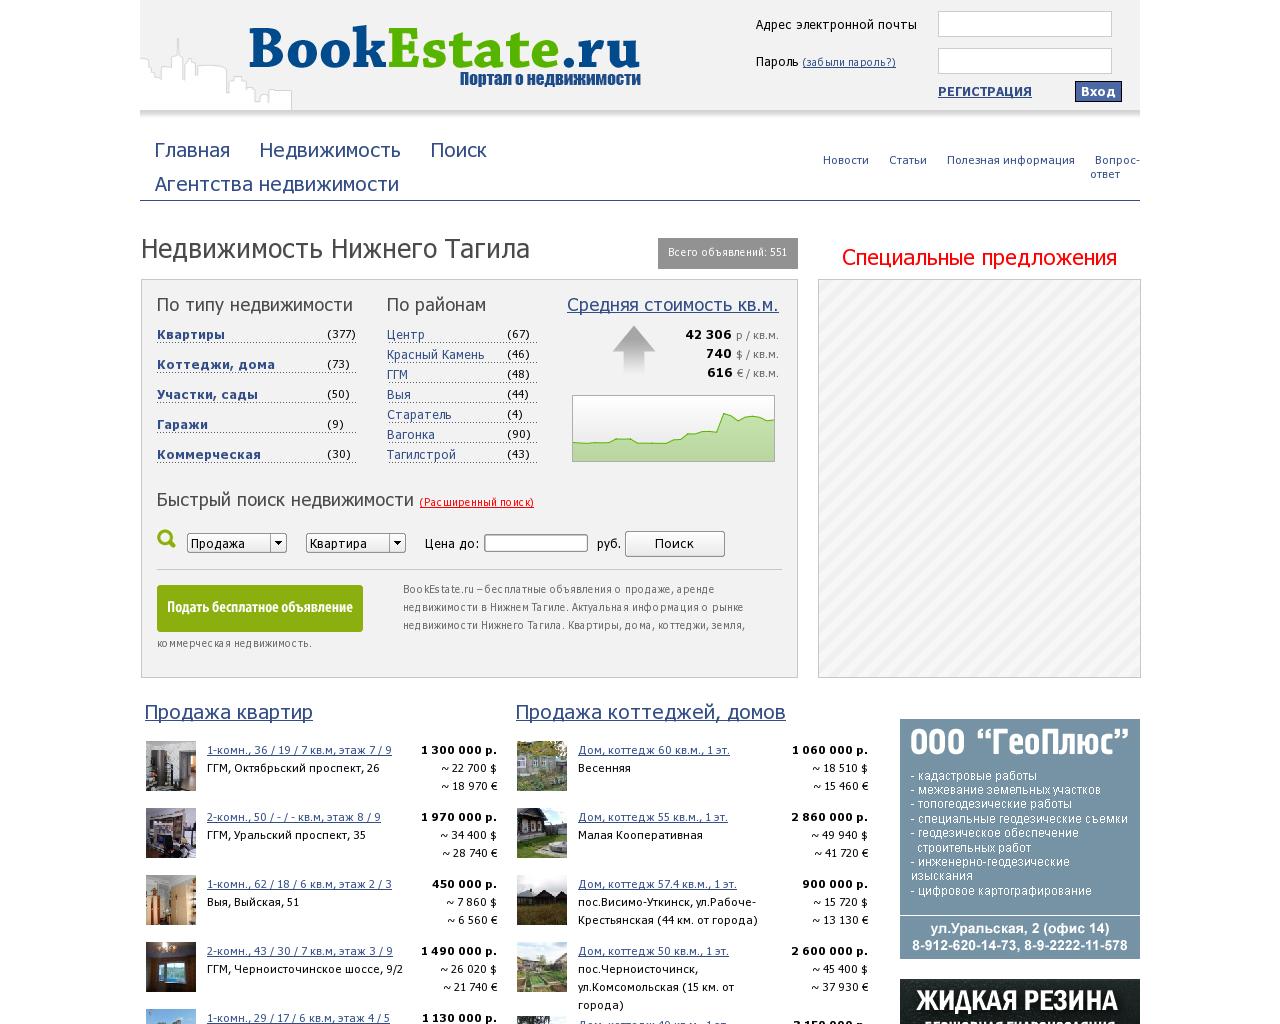 Изображение сайта bookestate.ru в разрешении 1280x1024